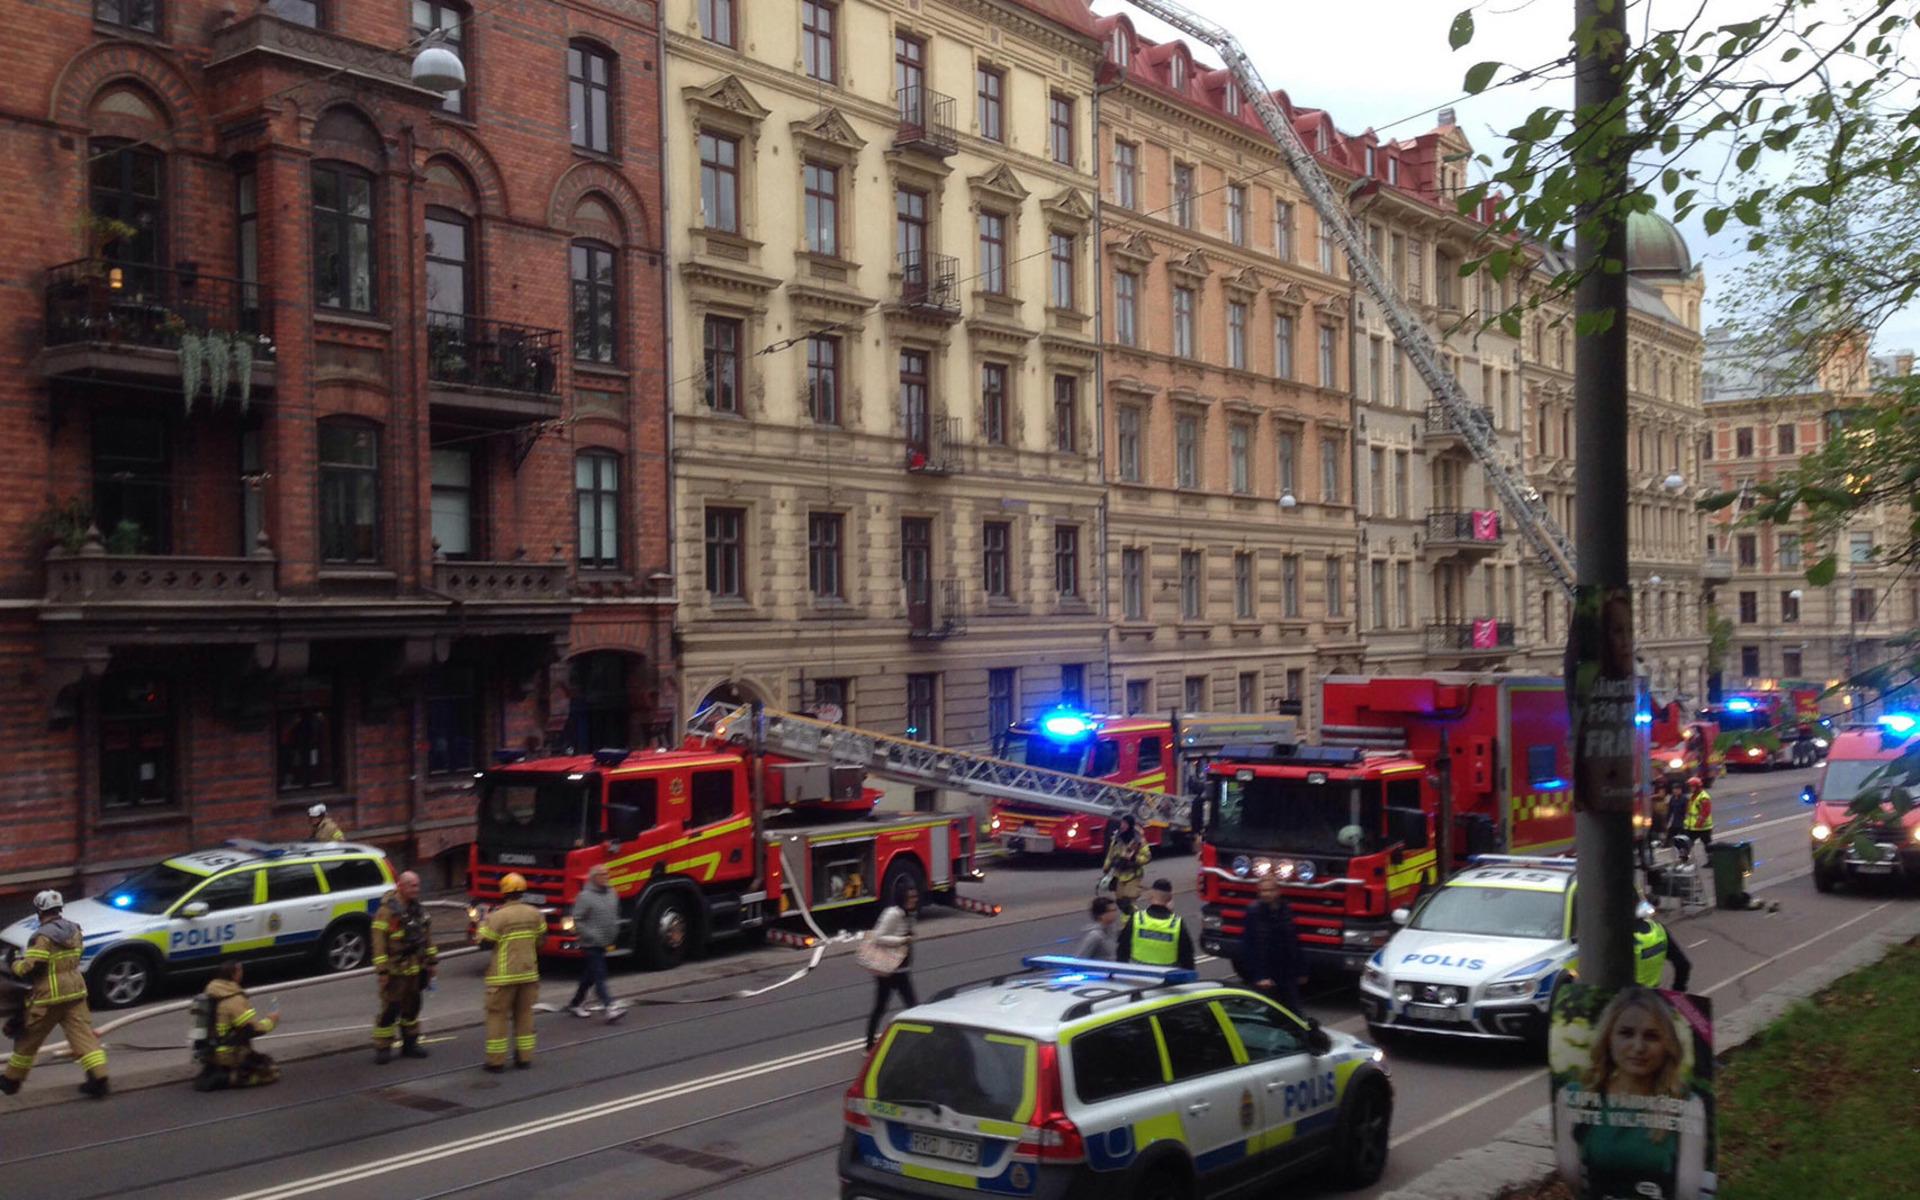 Brand i femvåningshus på Aschebergsgatan i centrala Göteborg.